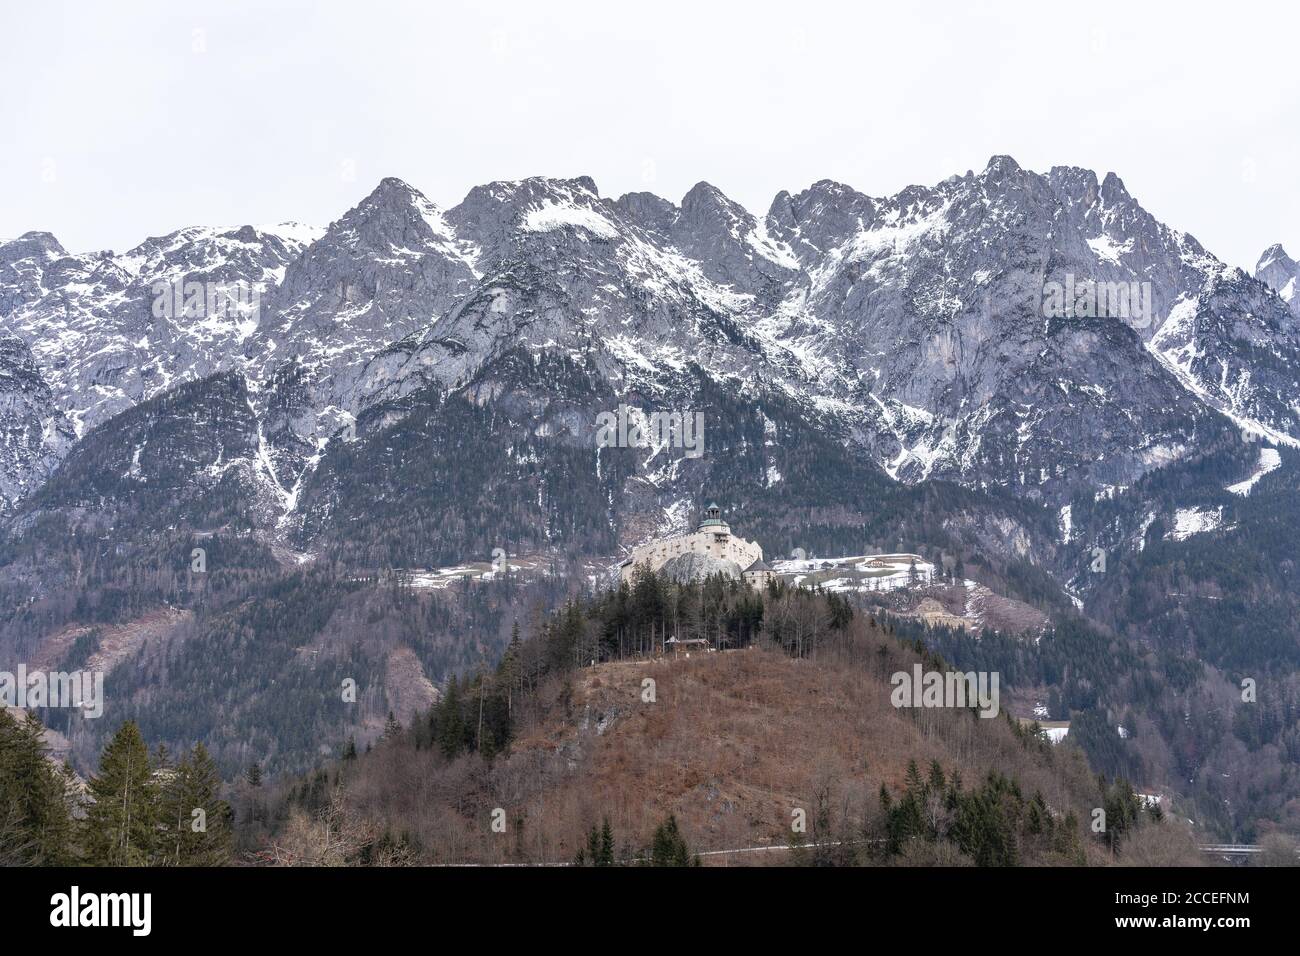 Europe, Austria, Salzburg State, Werfen, view of Hohenwerfen Castle in Salzburg State against the backdrop of the Tennen Mountains Stock Photo